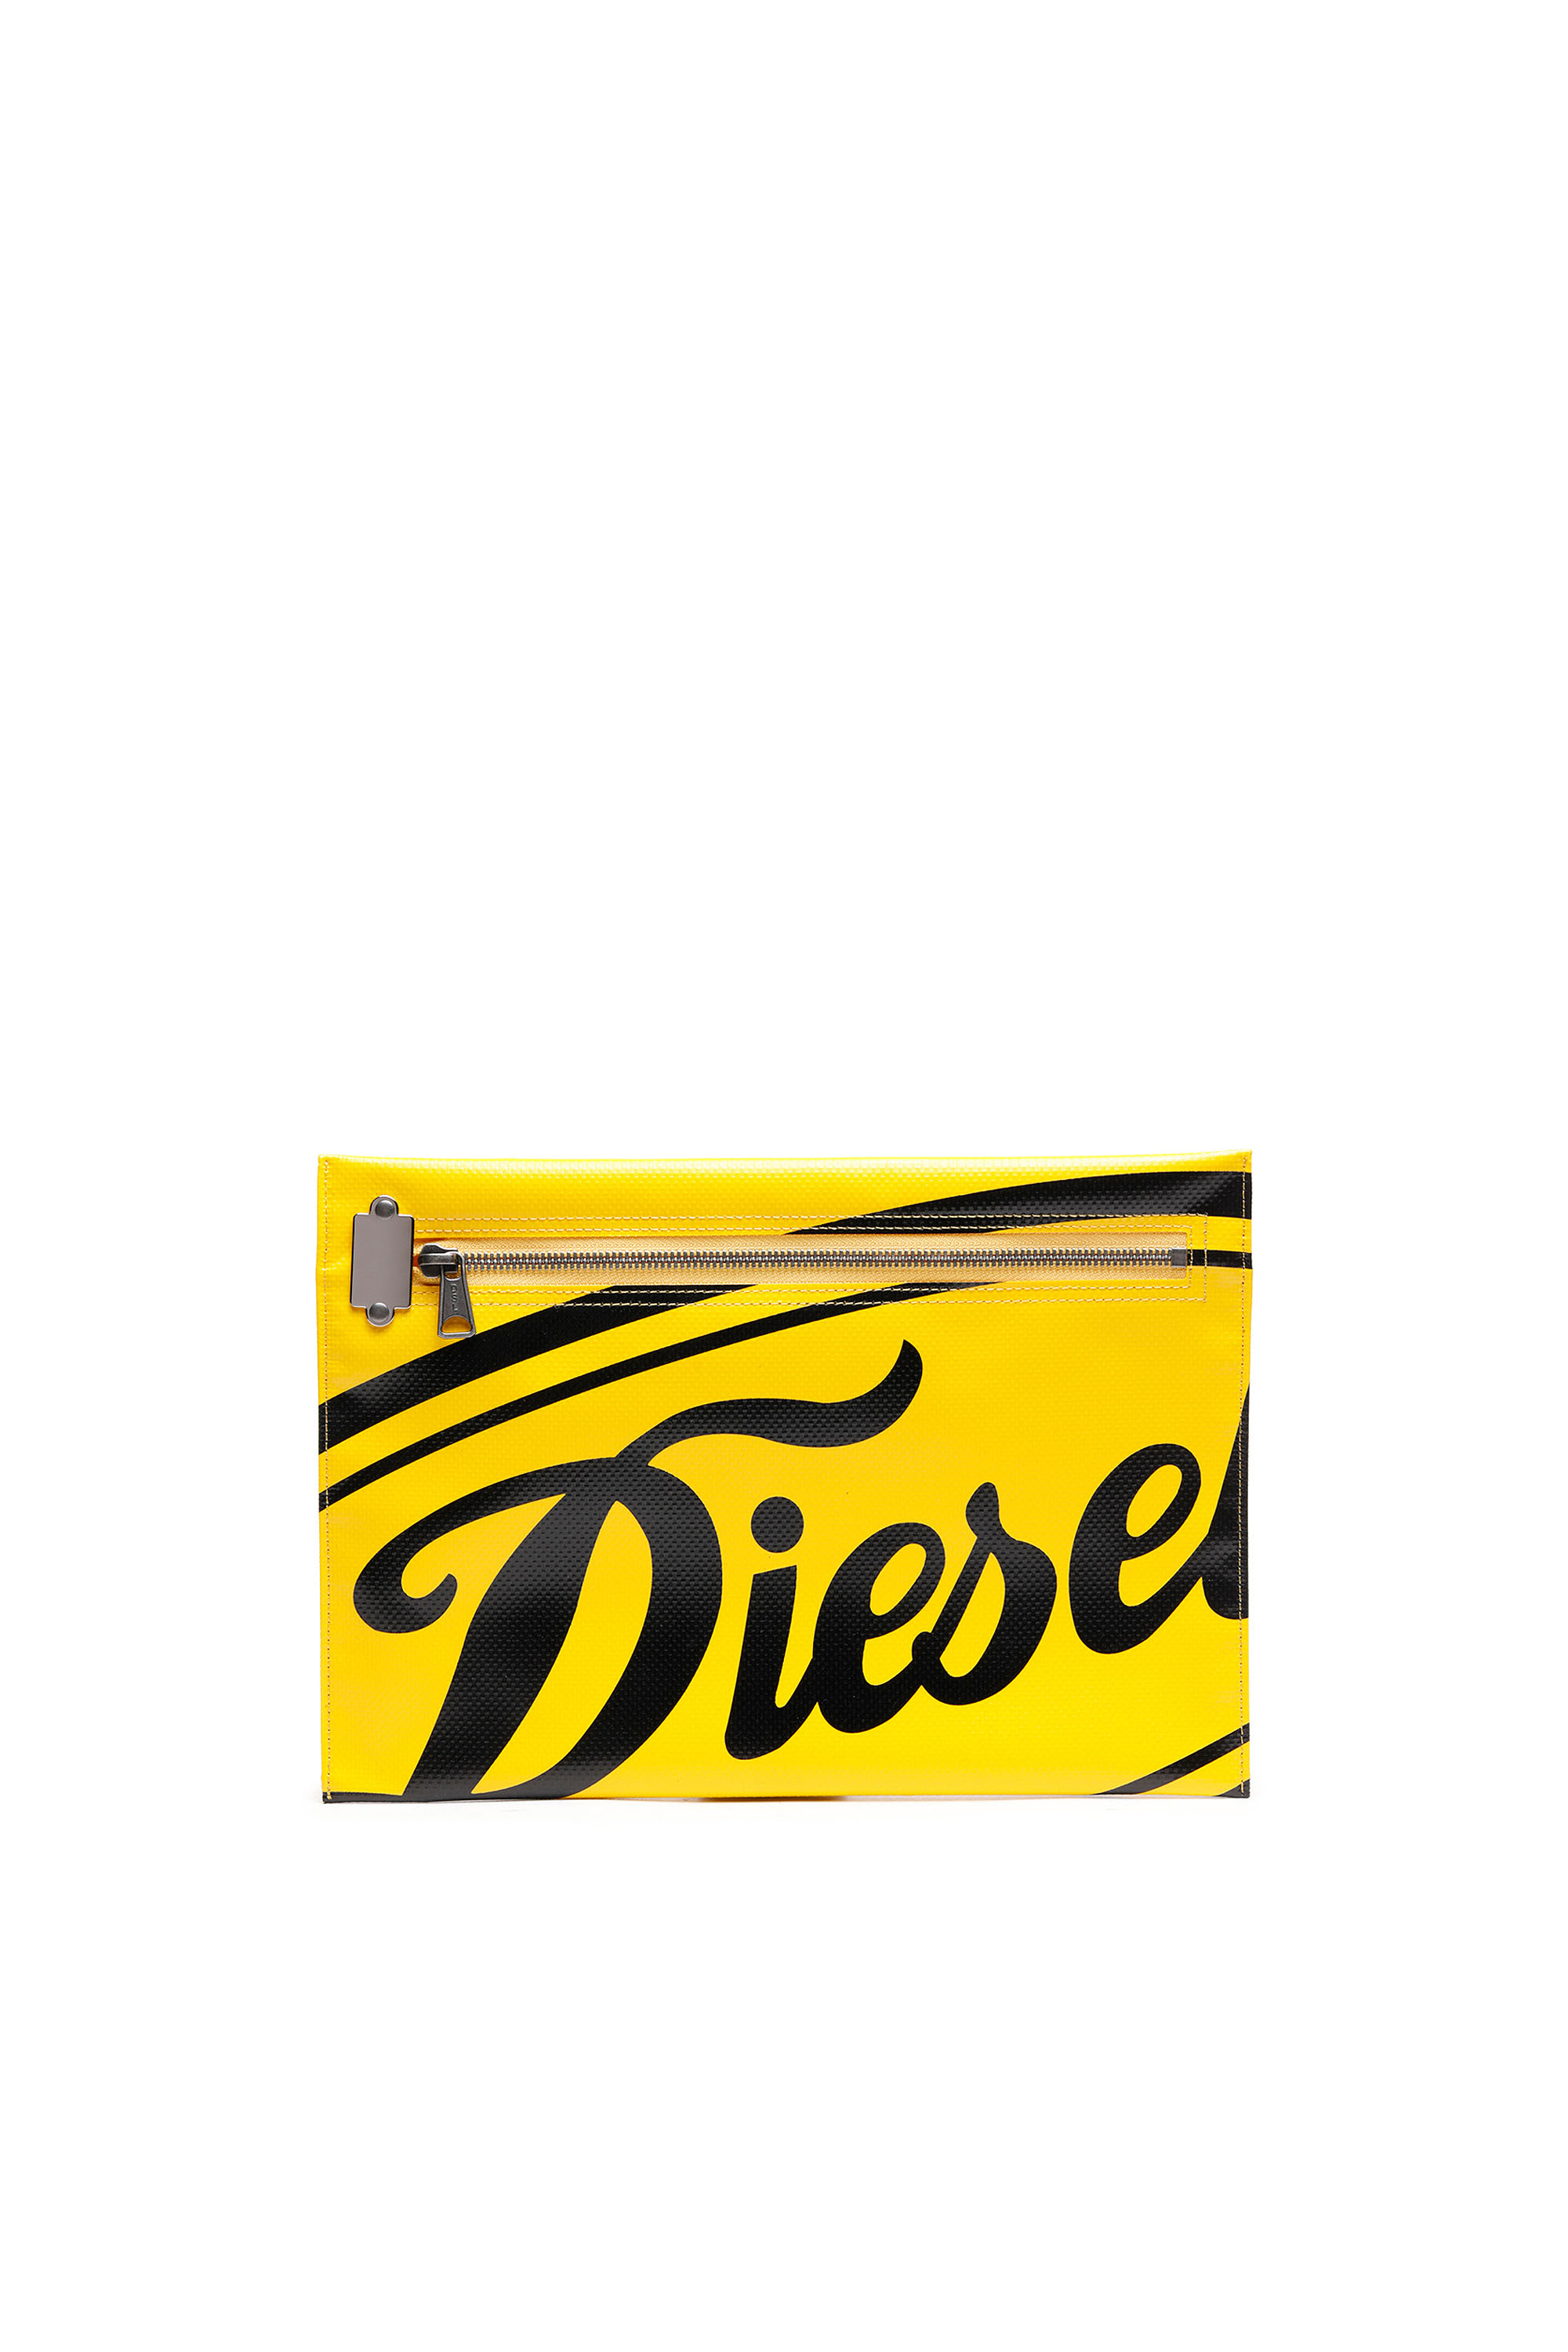 Diesel - SLYW, Yellow - Image 1